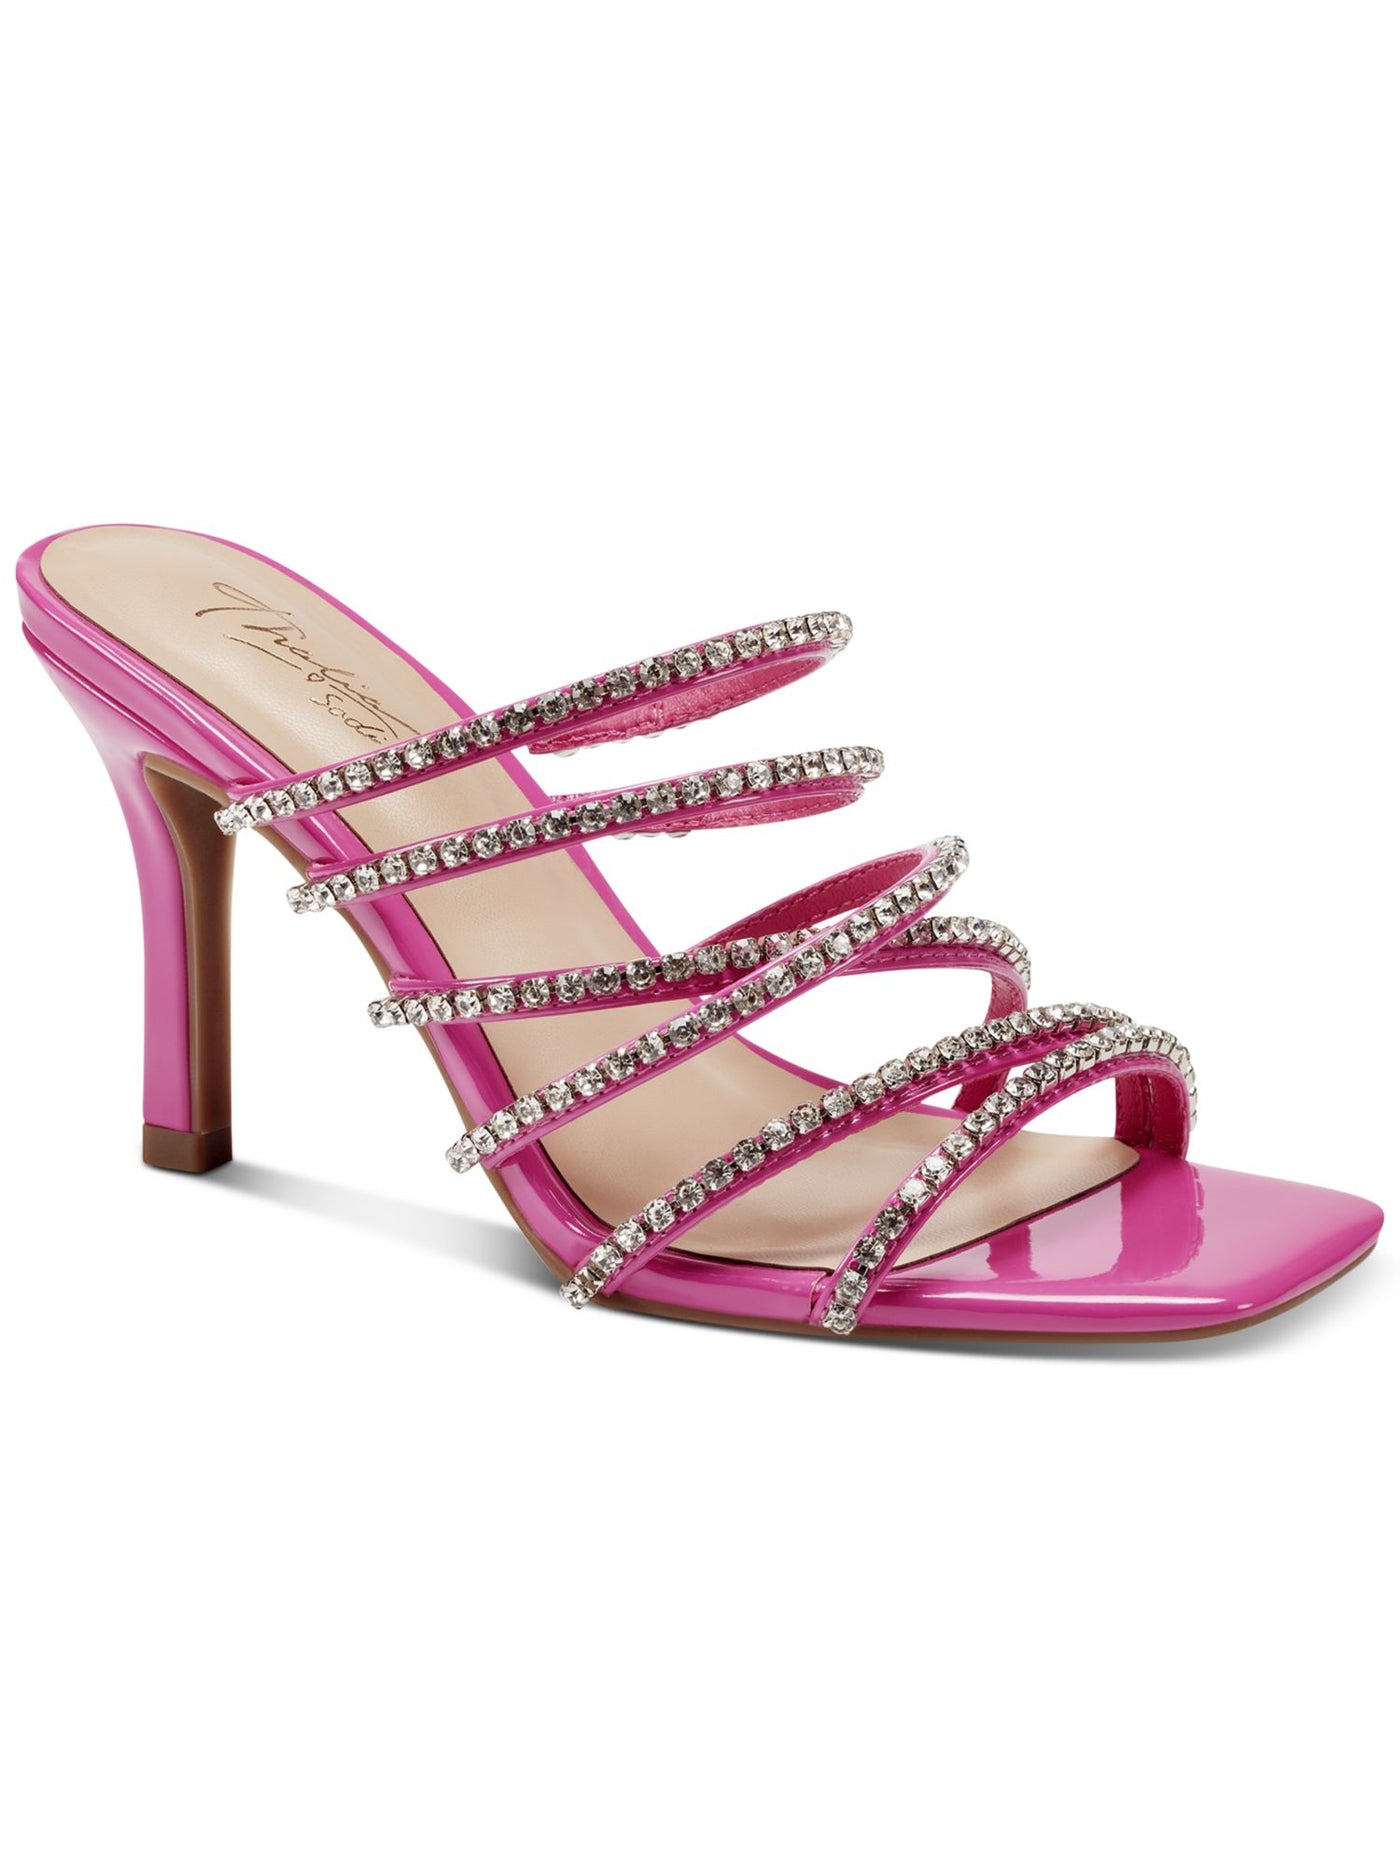 THALIA SODI Womens Pink Goring Padded Embellished Strappy Dahlia Square Toe Stiletto Slip On Dress Heeled Sandal 7.5 M